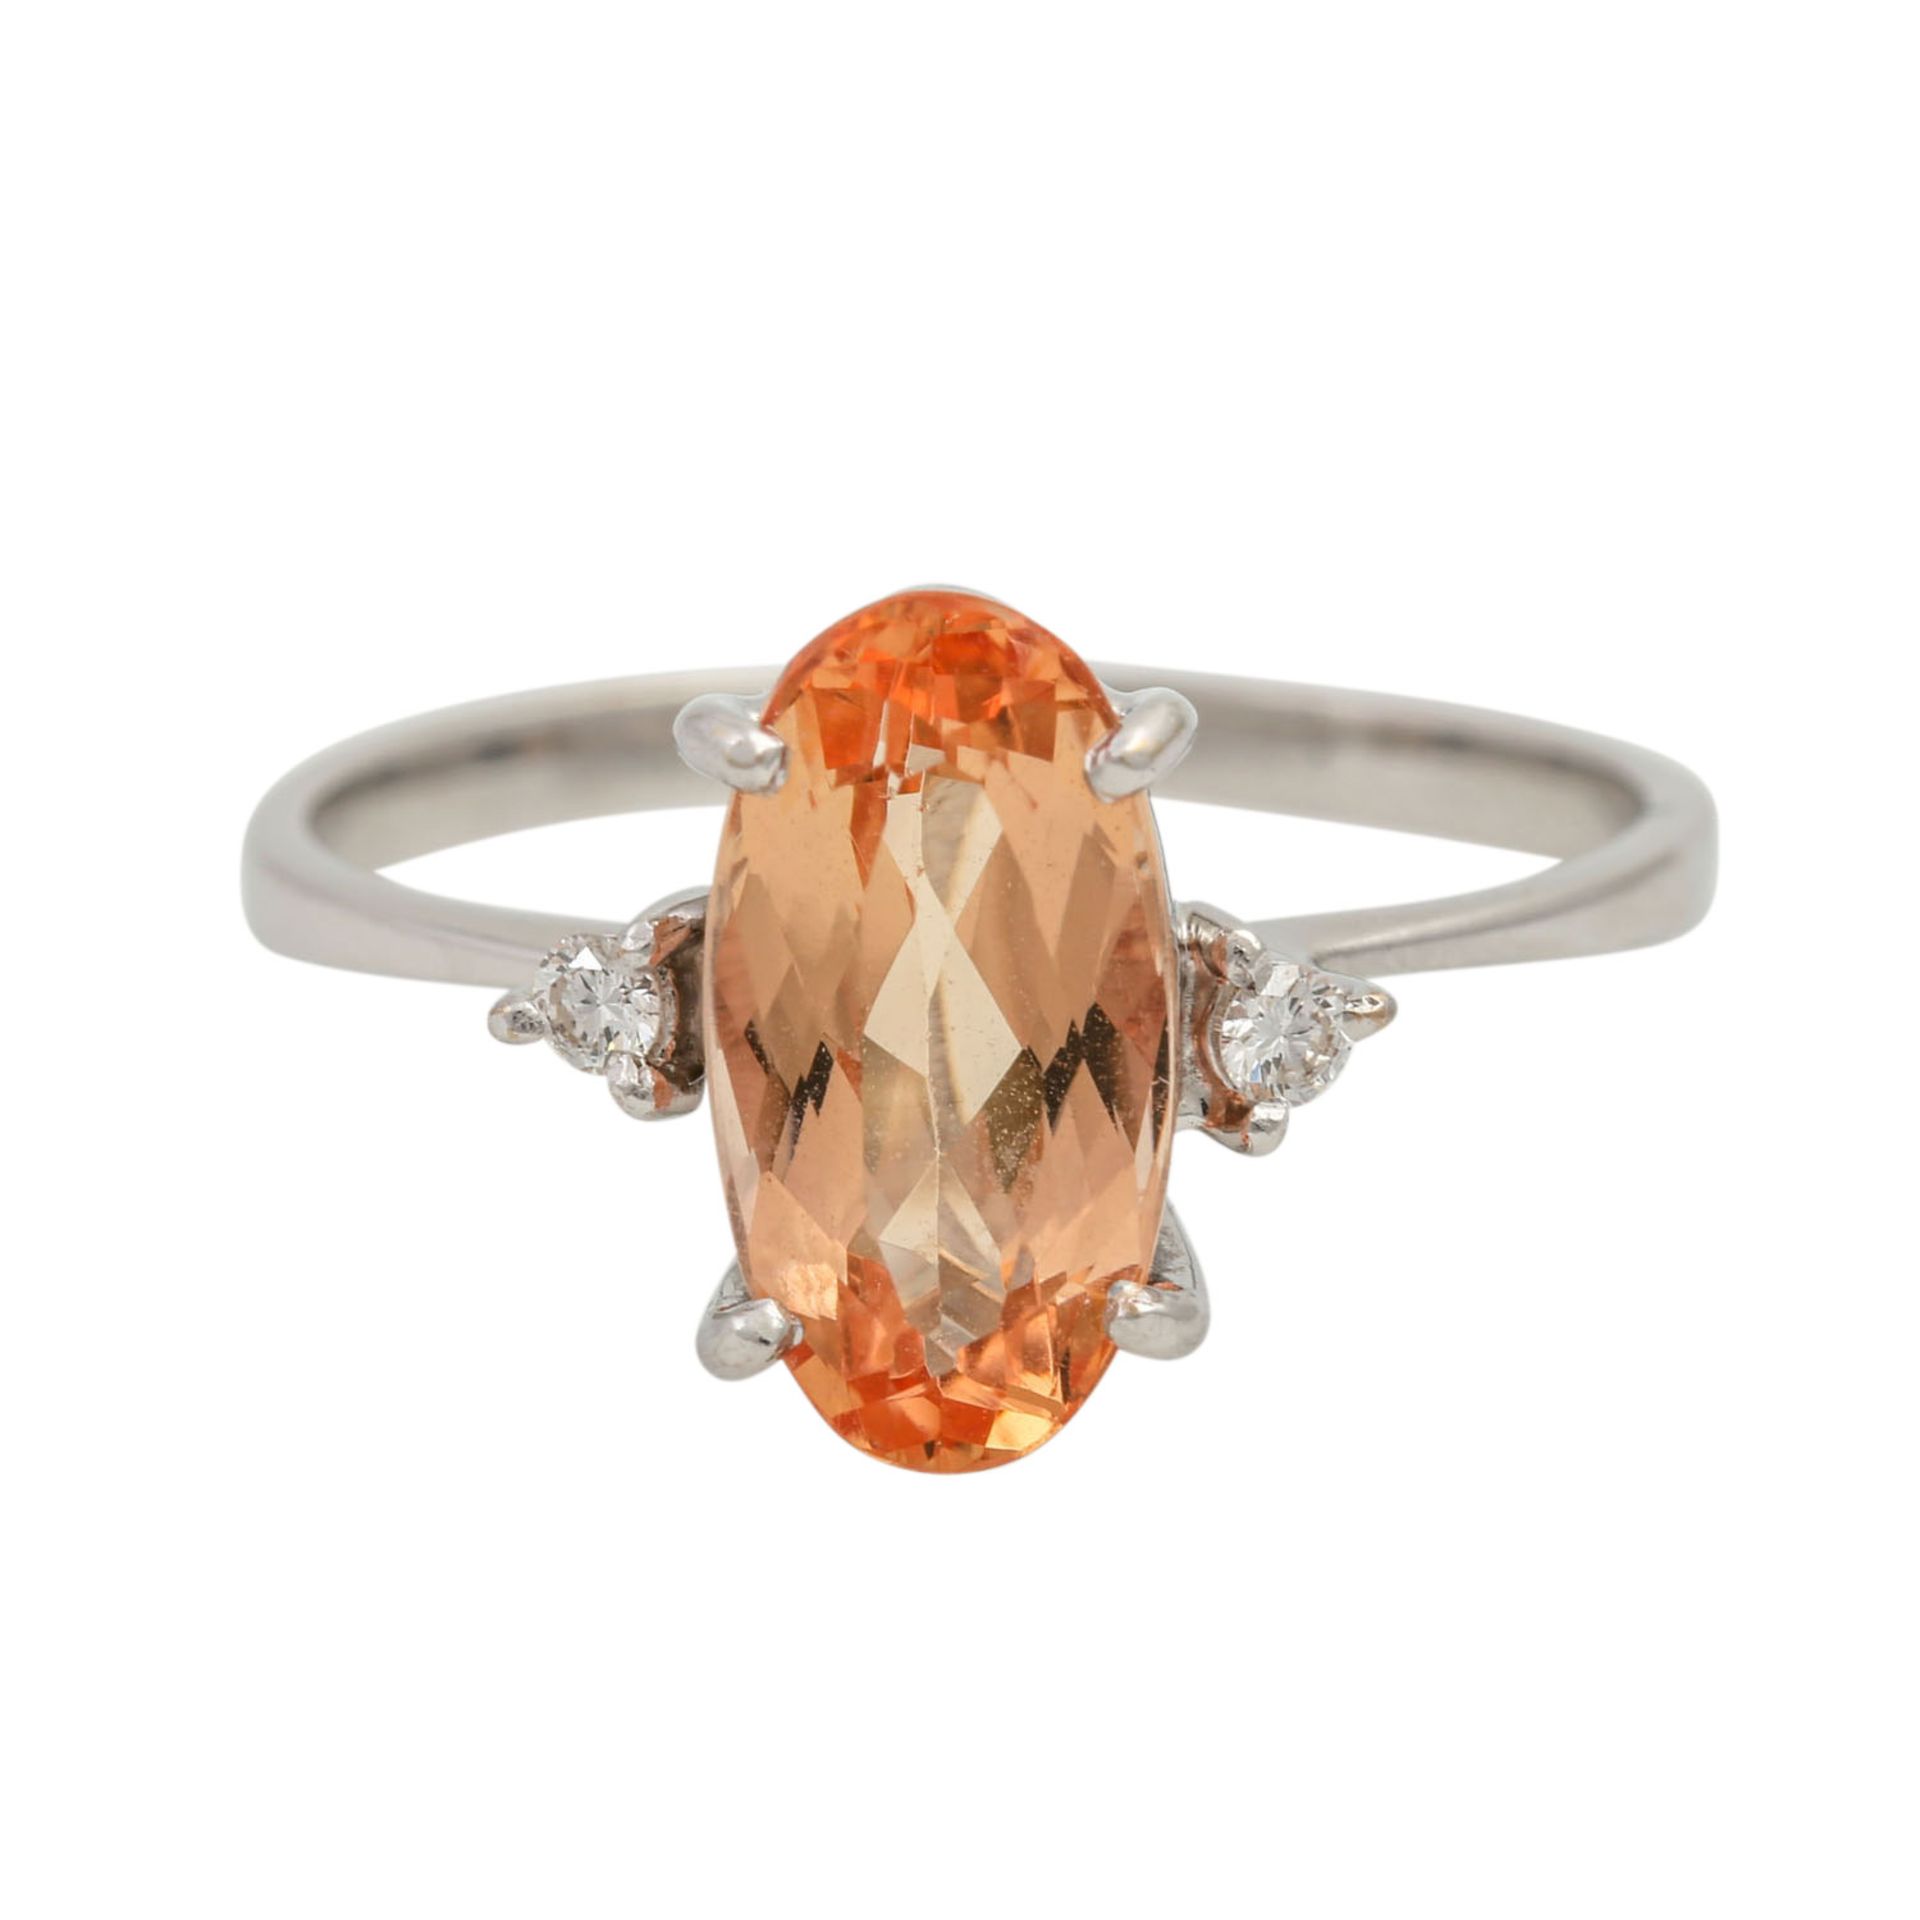 Ring mit apricotfarbenem Topas und 2 Achtkantdiamanten, Topas oval facettiert, WG 18K, - Image 2 of 4